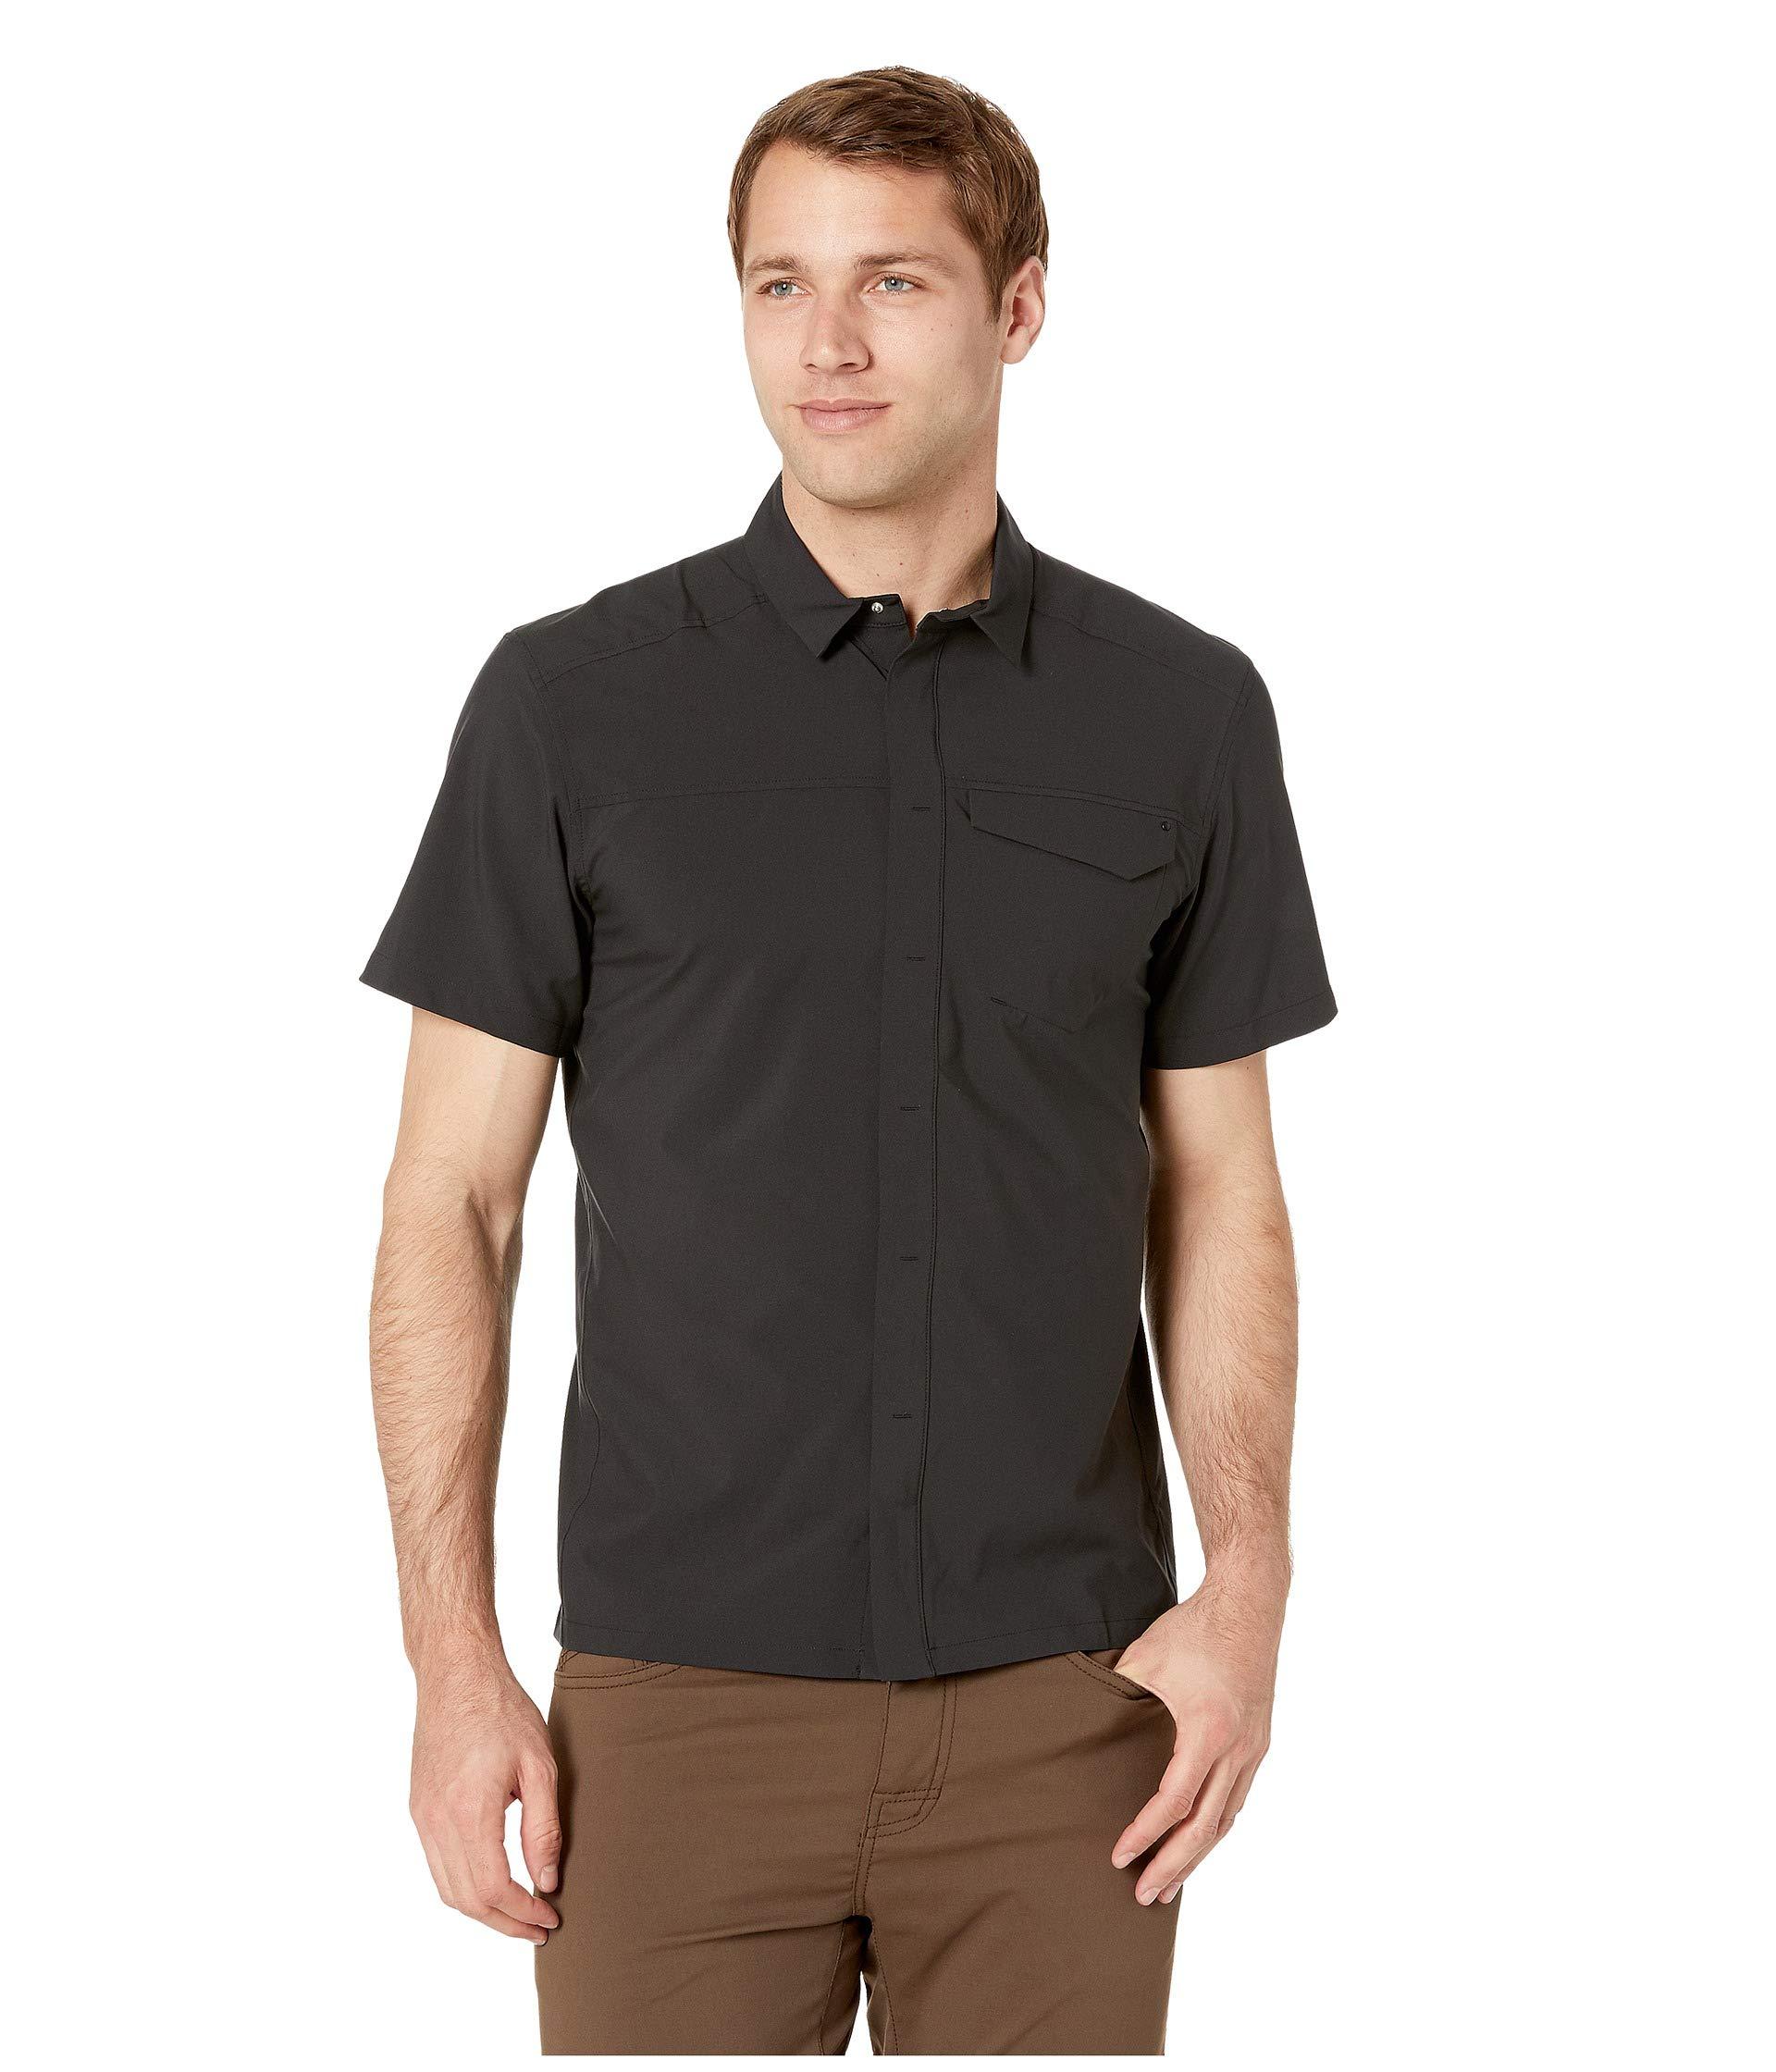 Arc'teryx Synthetic Skyline Short Sleeve Shirt in Black for Men - Lyst